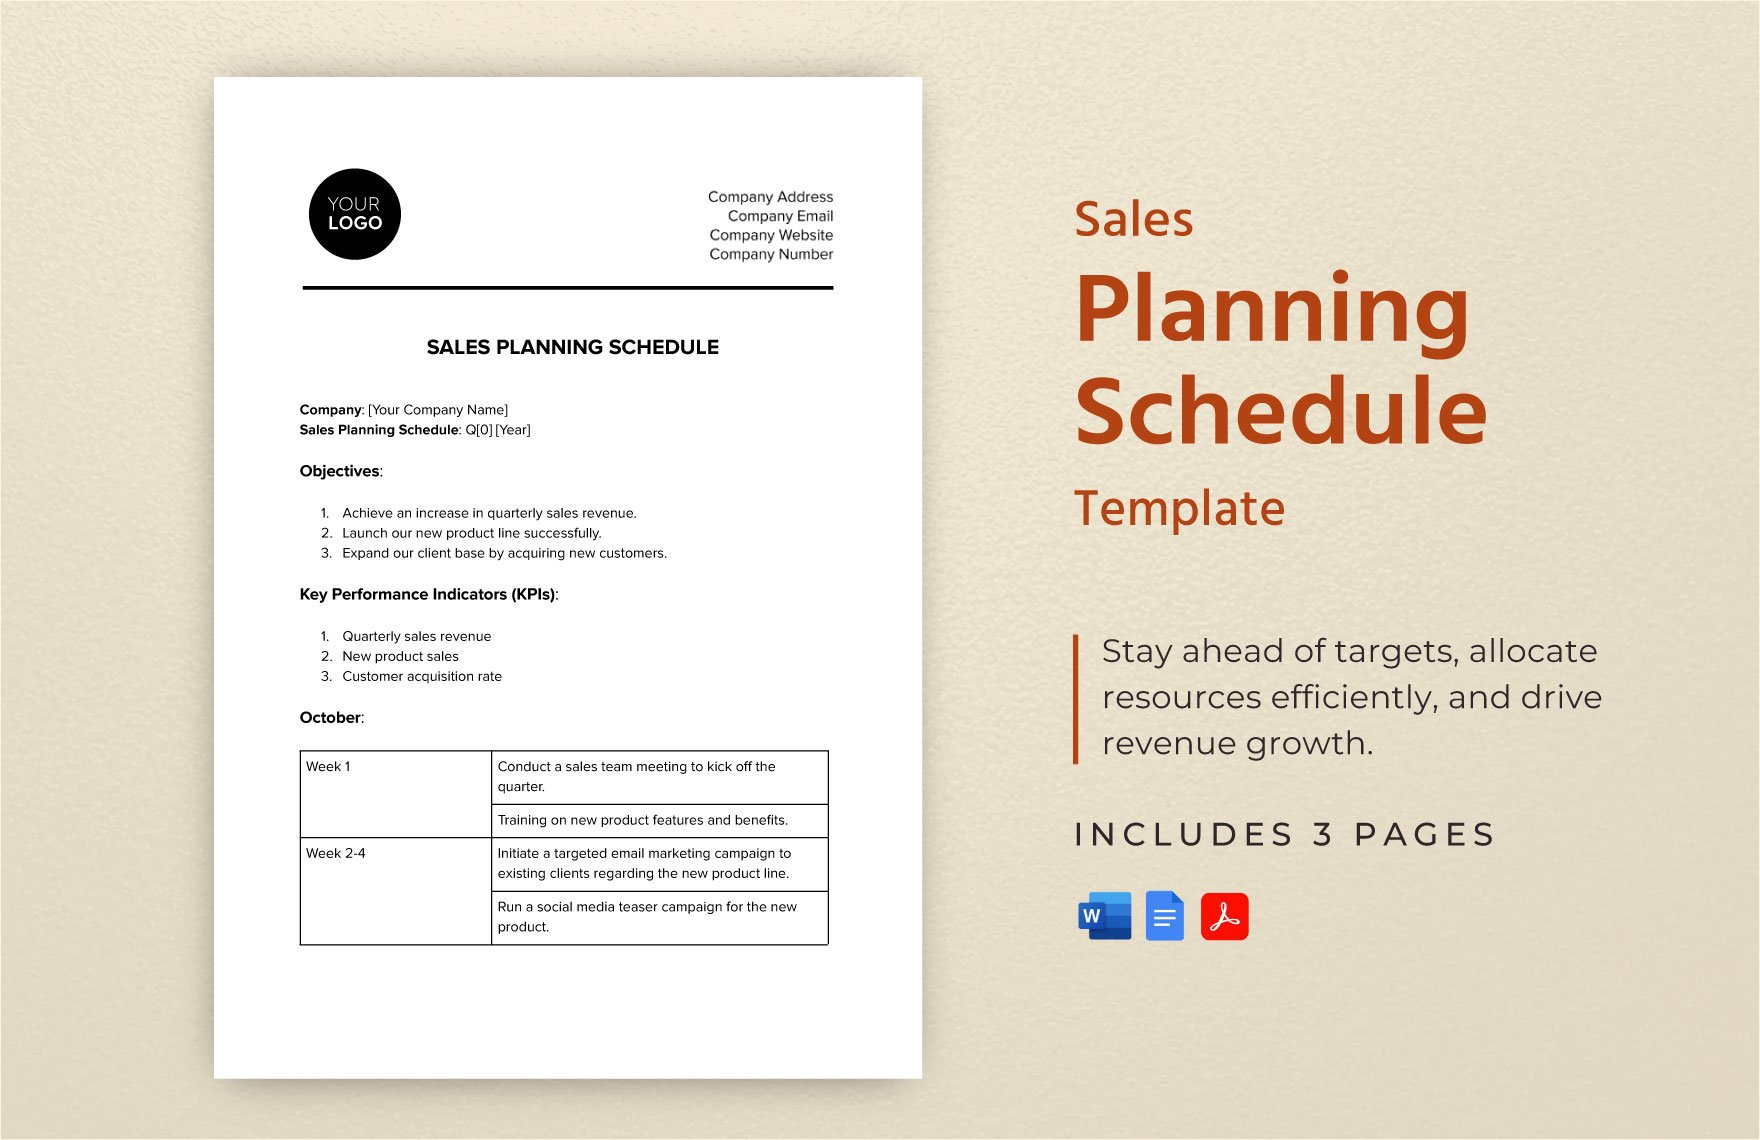 Sales Planning Schedule Template in Word, Google Docs, PDF